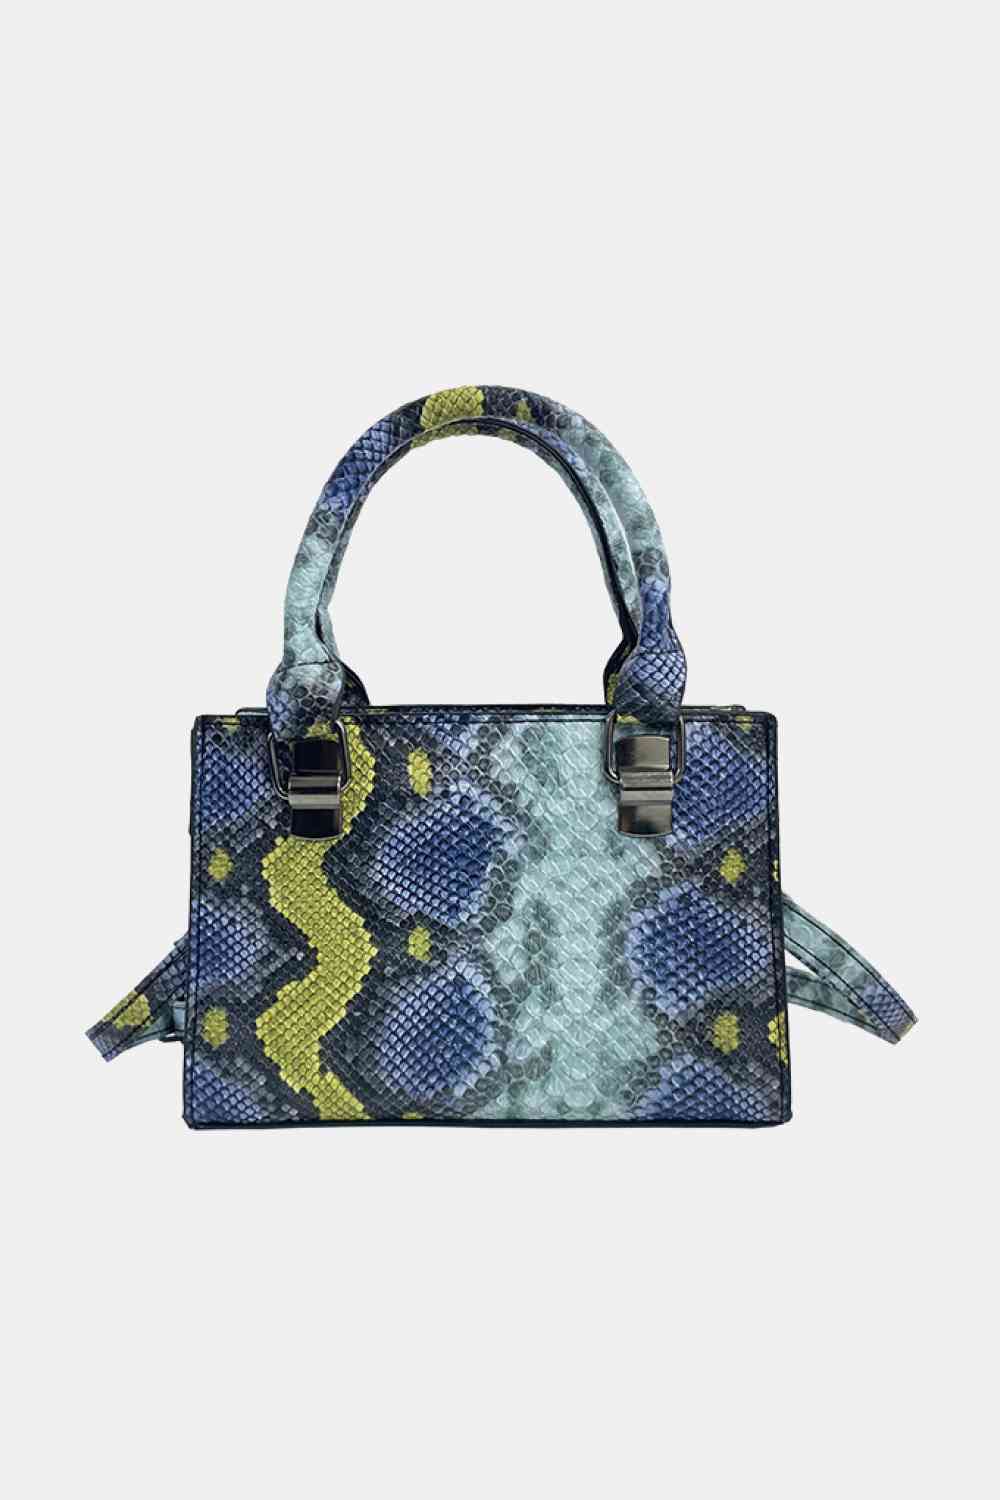 TEEK - Snakeskin Print PU Leather Handbag BAG TEEK Trend Royal  Blue  